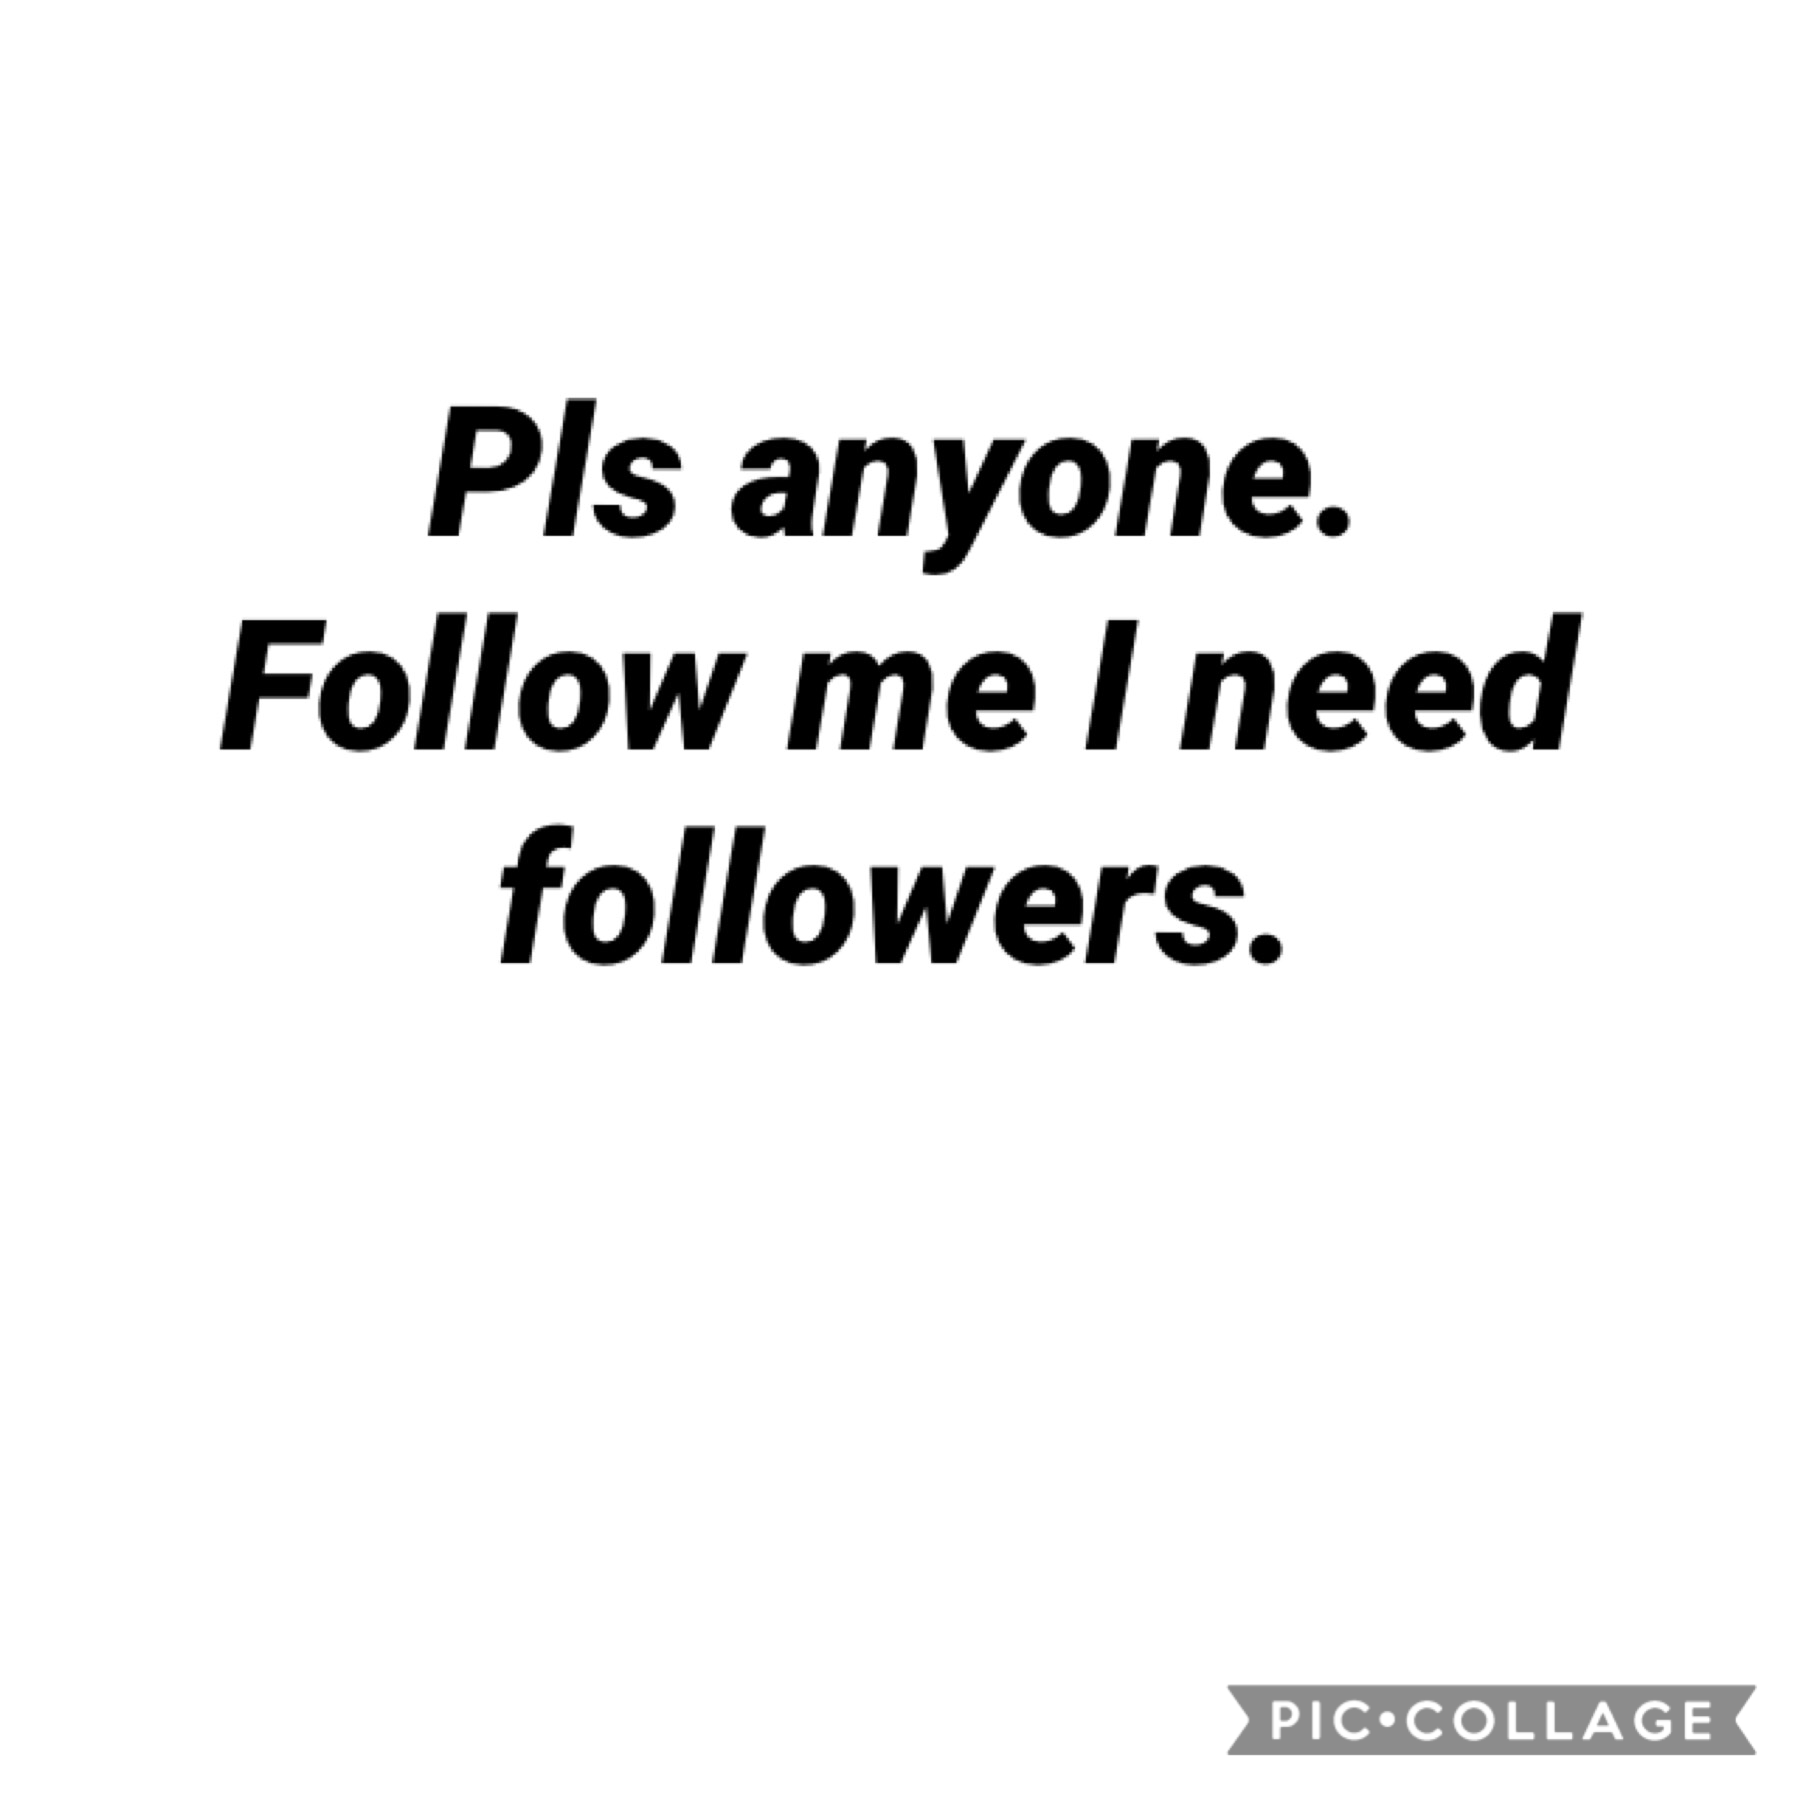 Just follow me pls